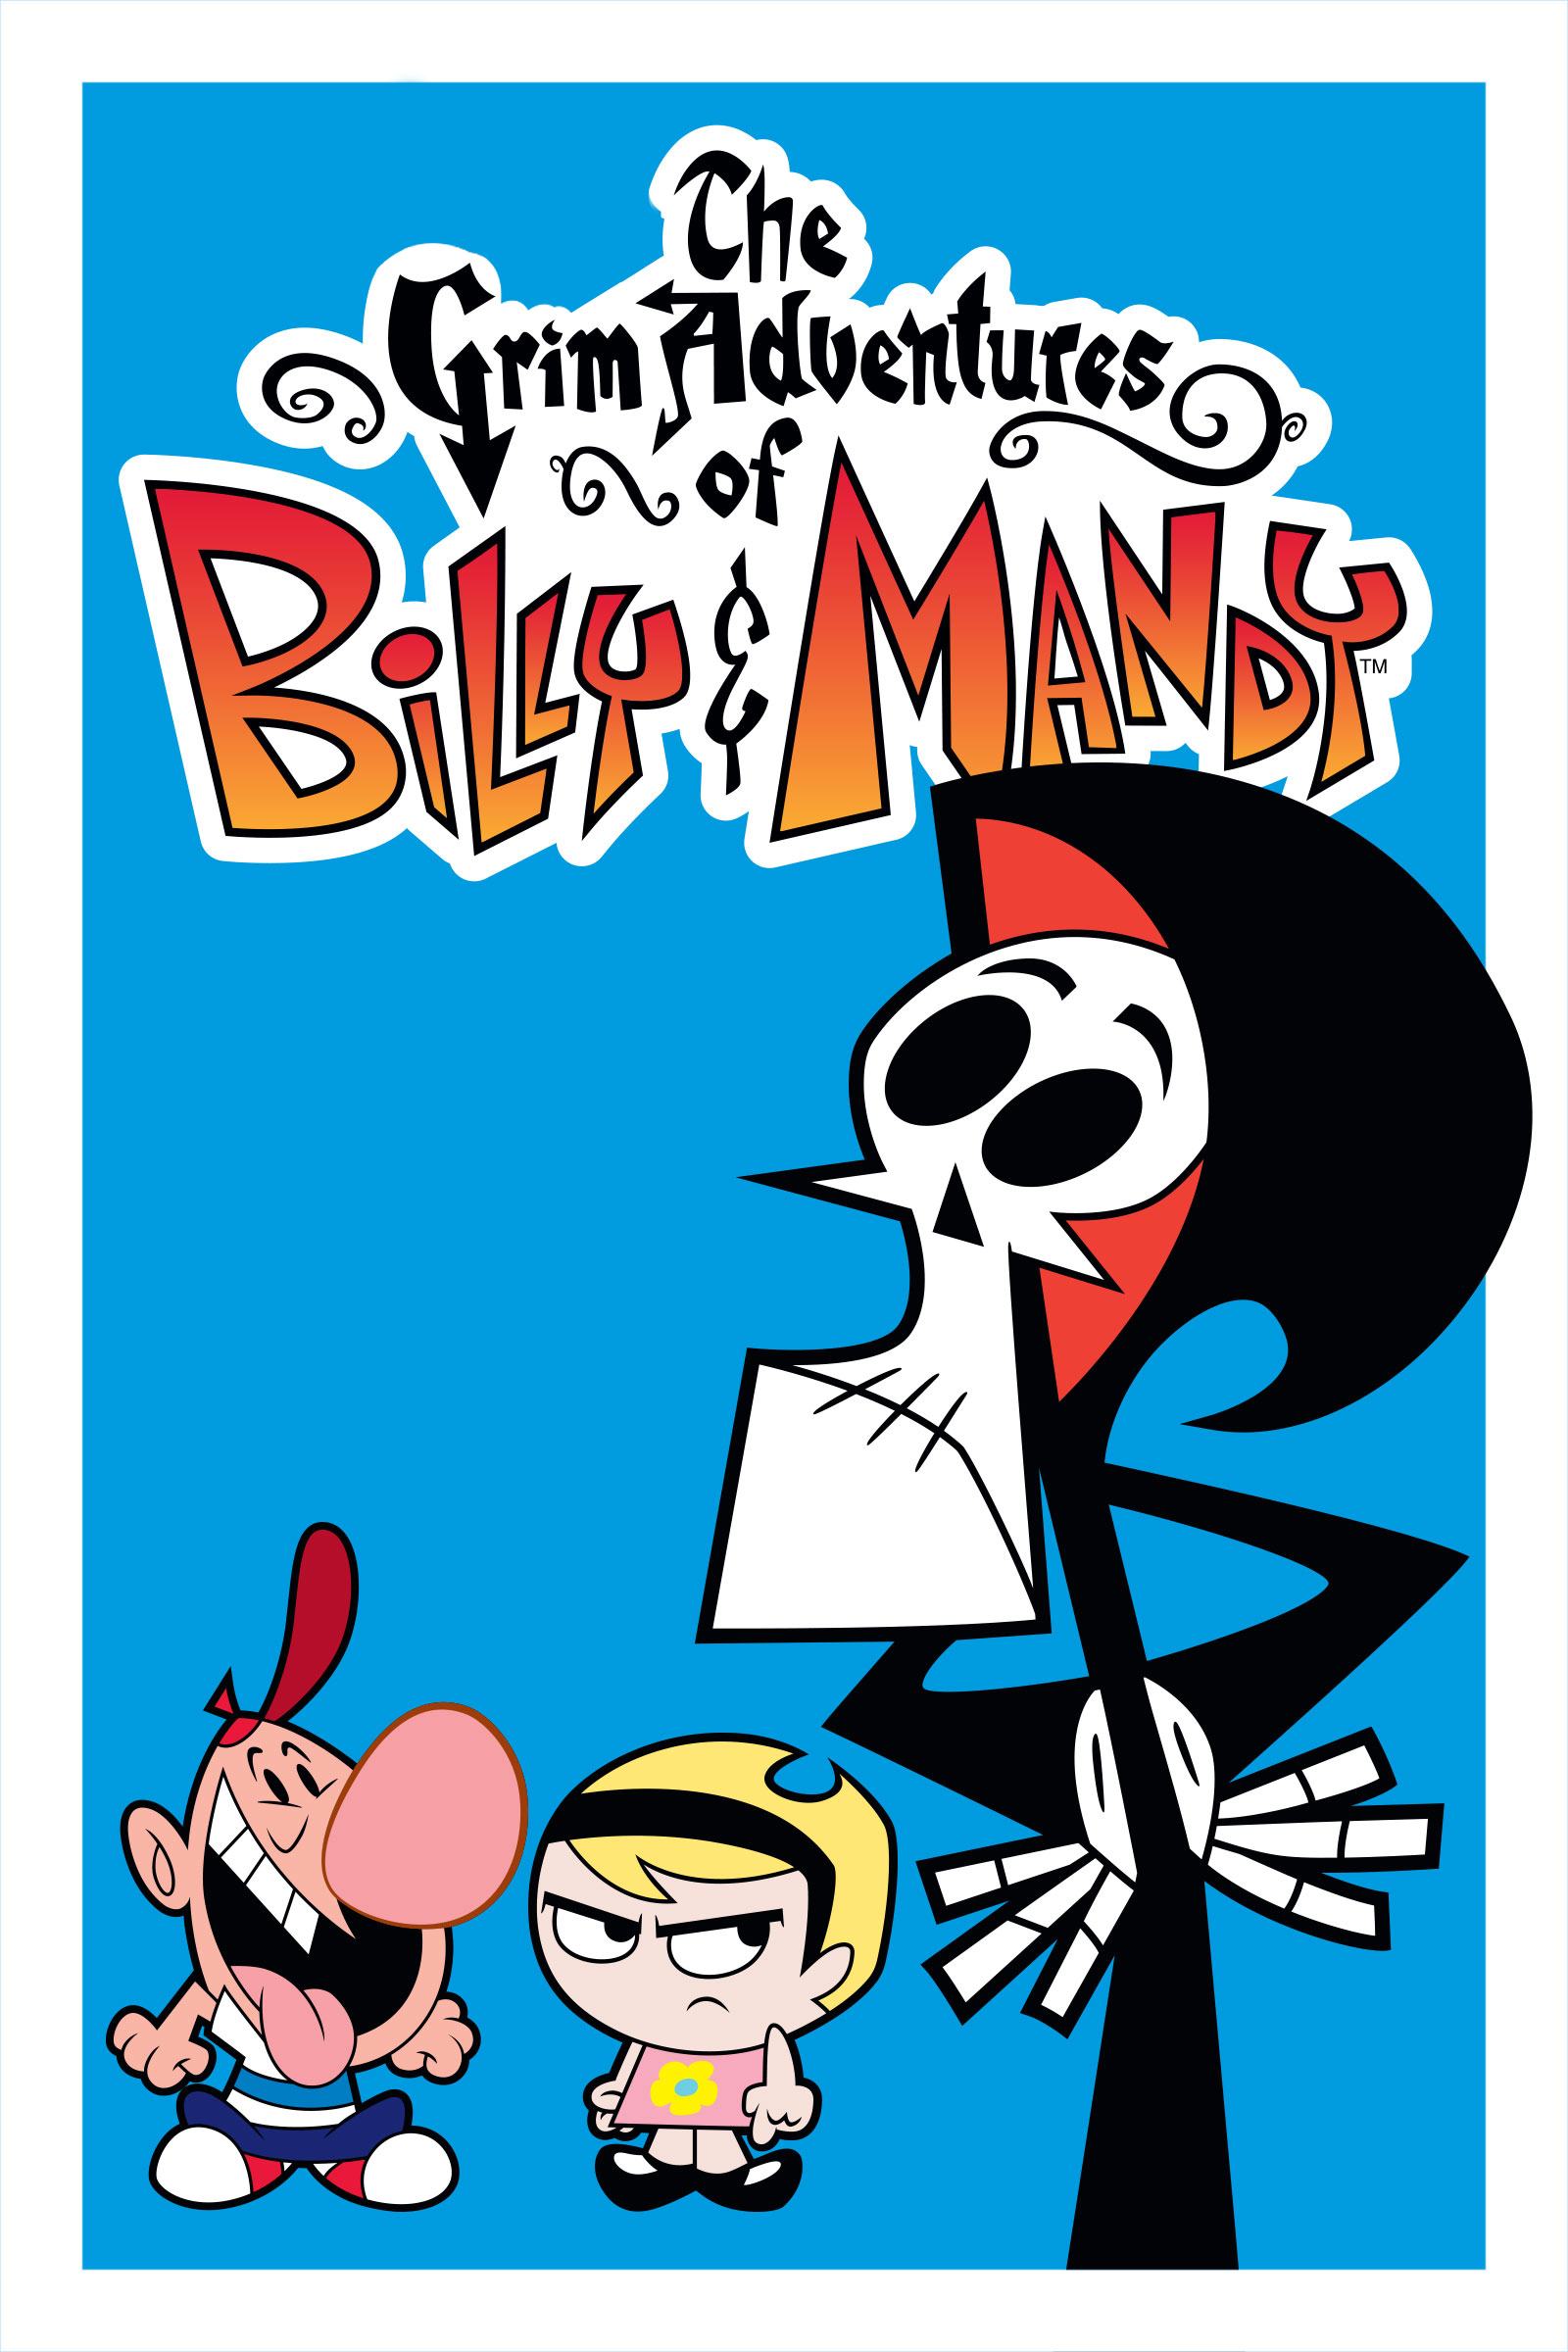 The Grim Adventures of Billy & Mandy (season 1) - Wikipedia